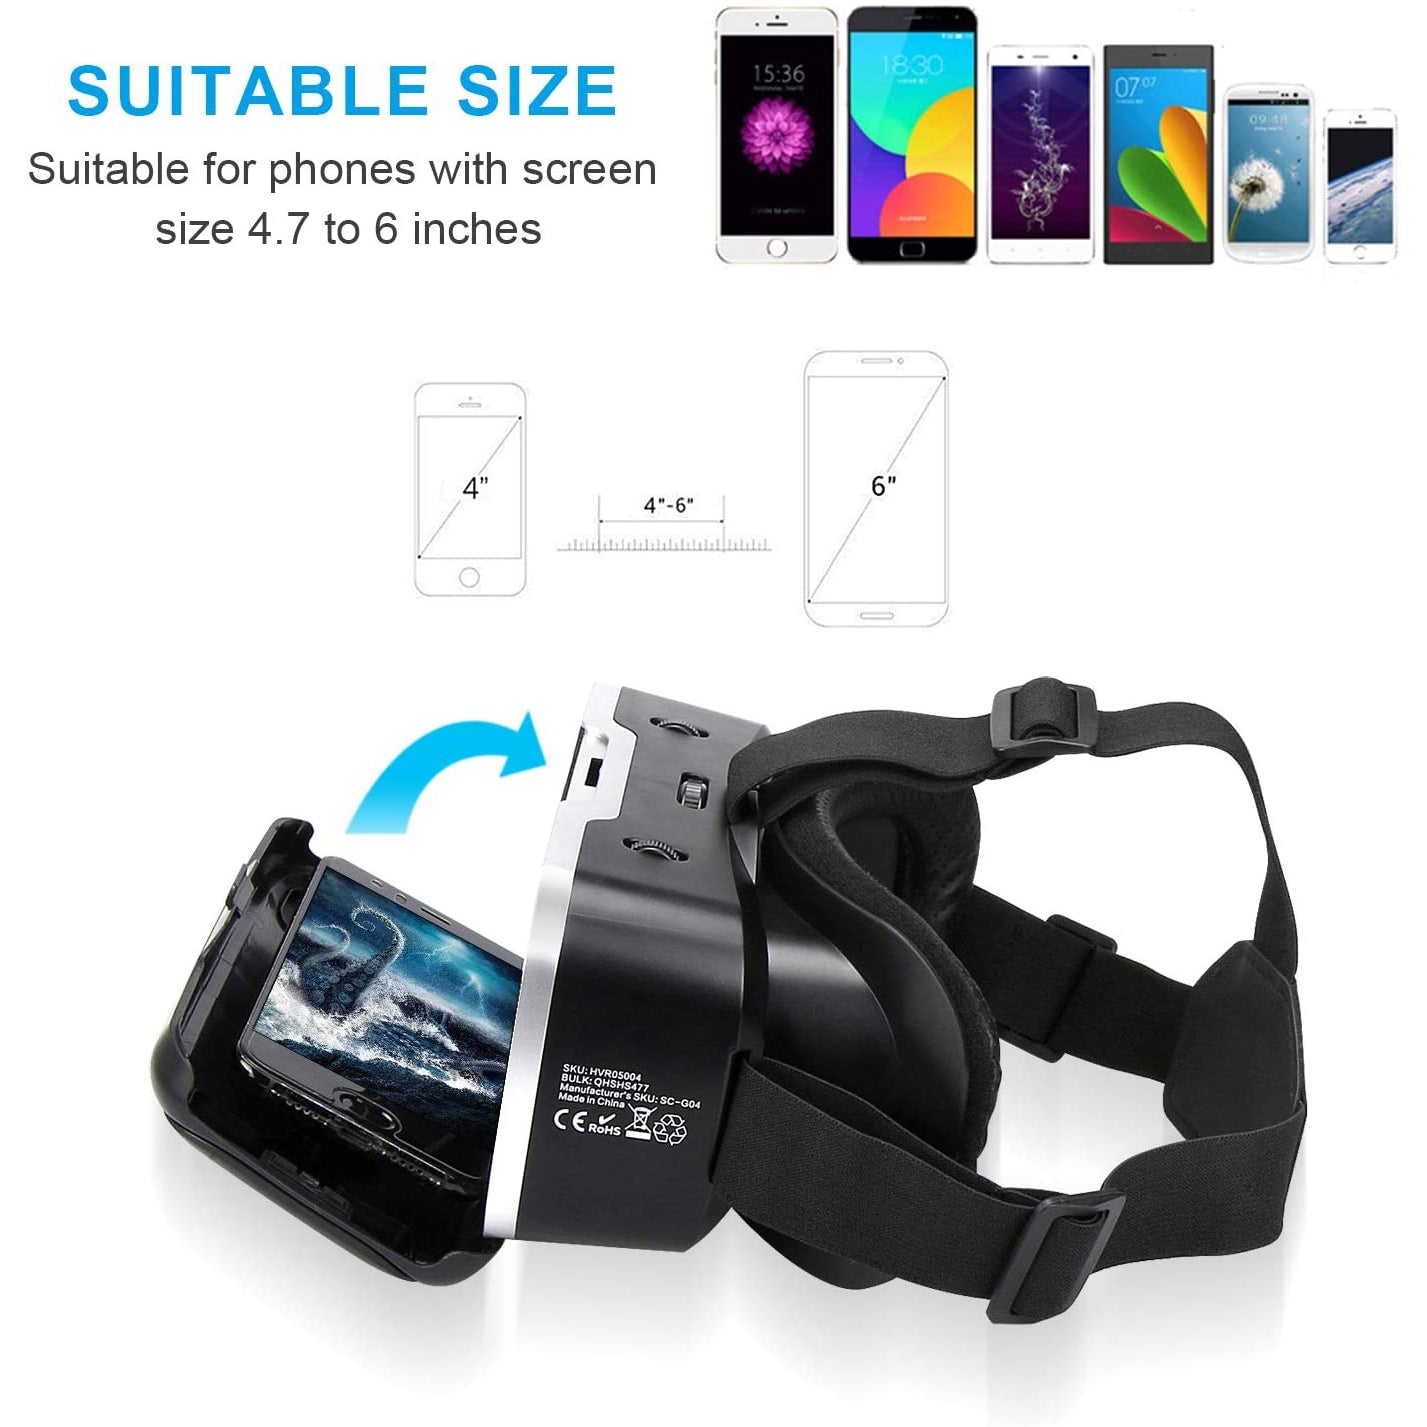 TechRise 3D VR Headset - Black